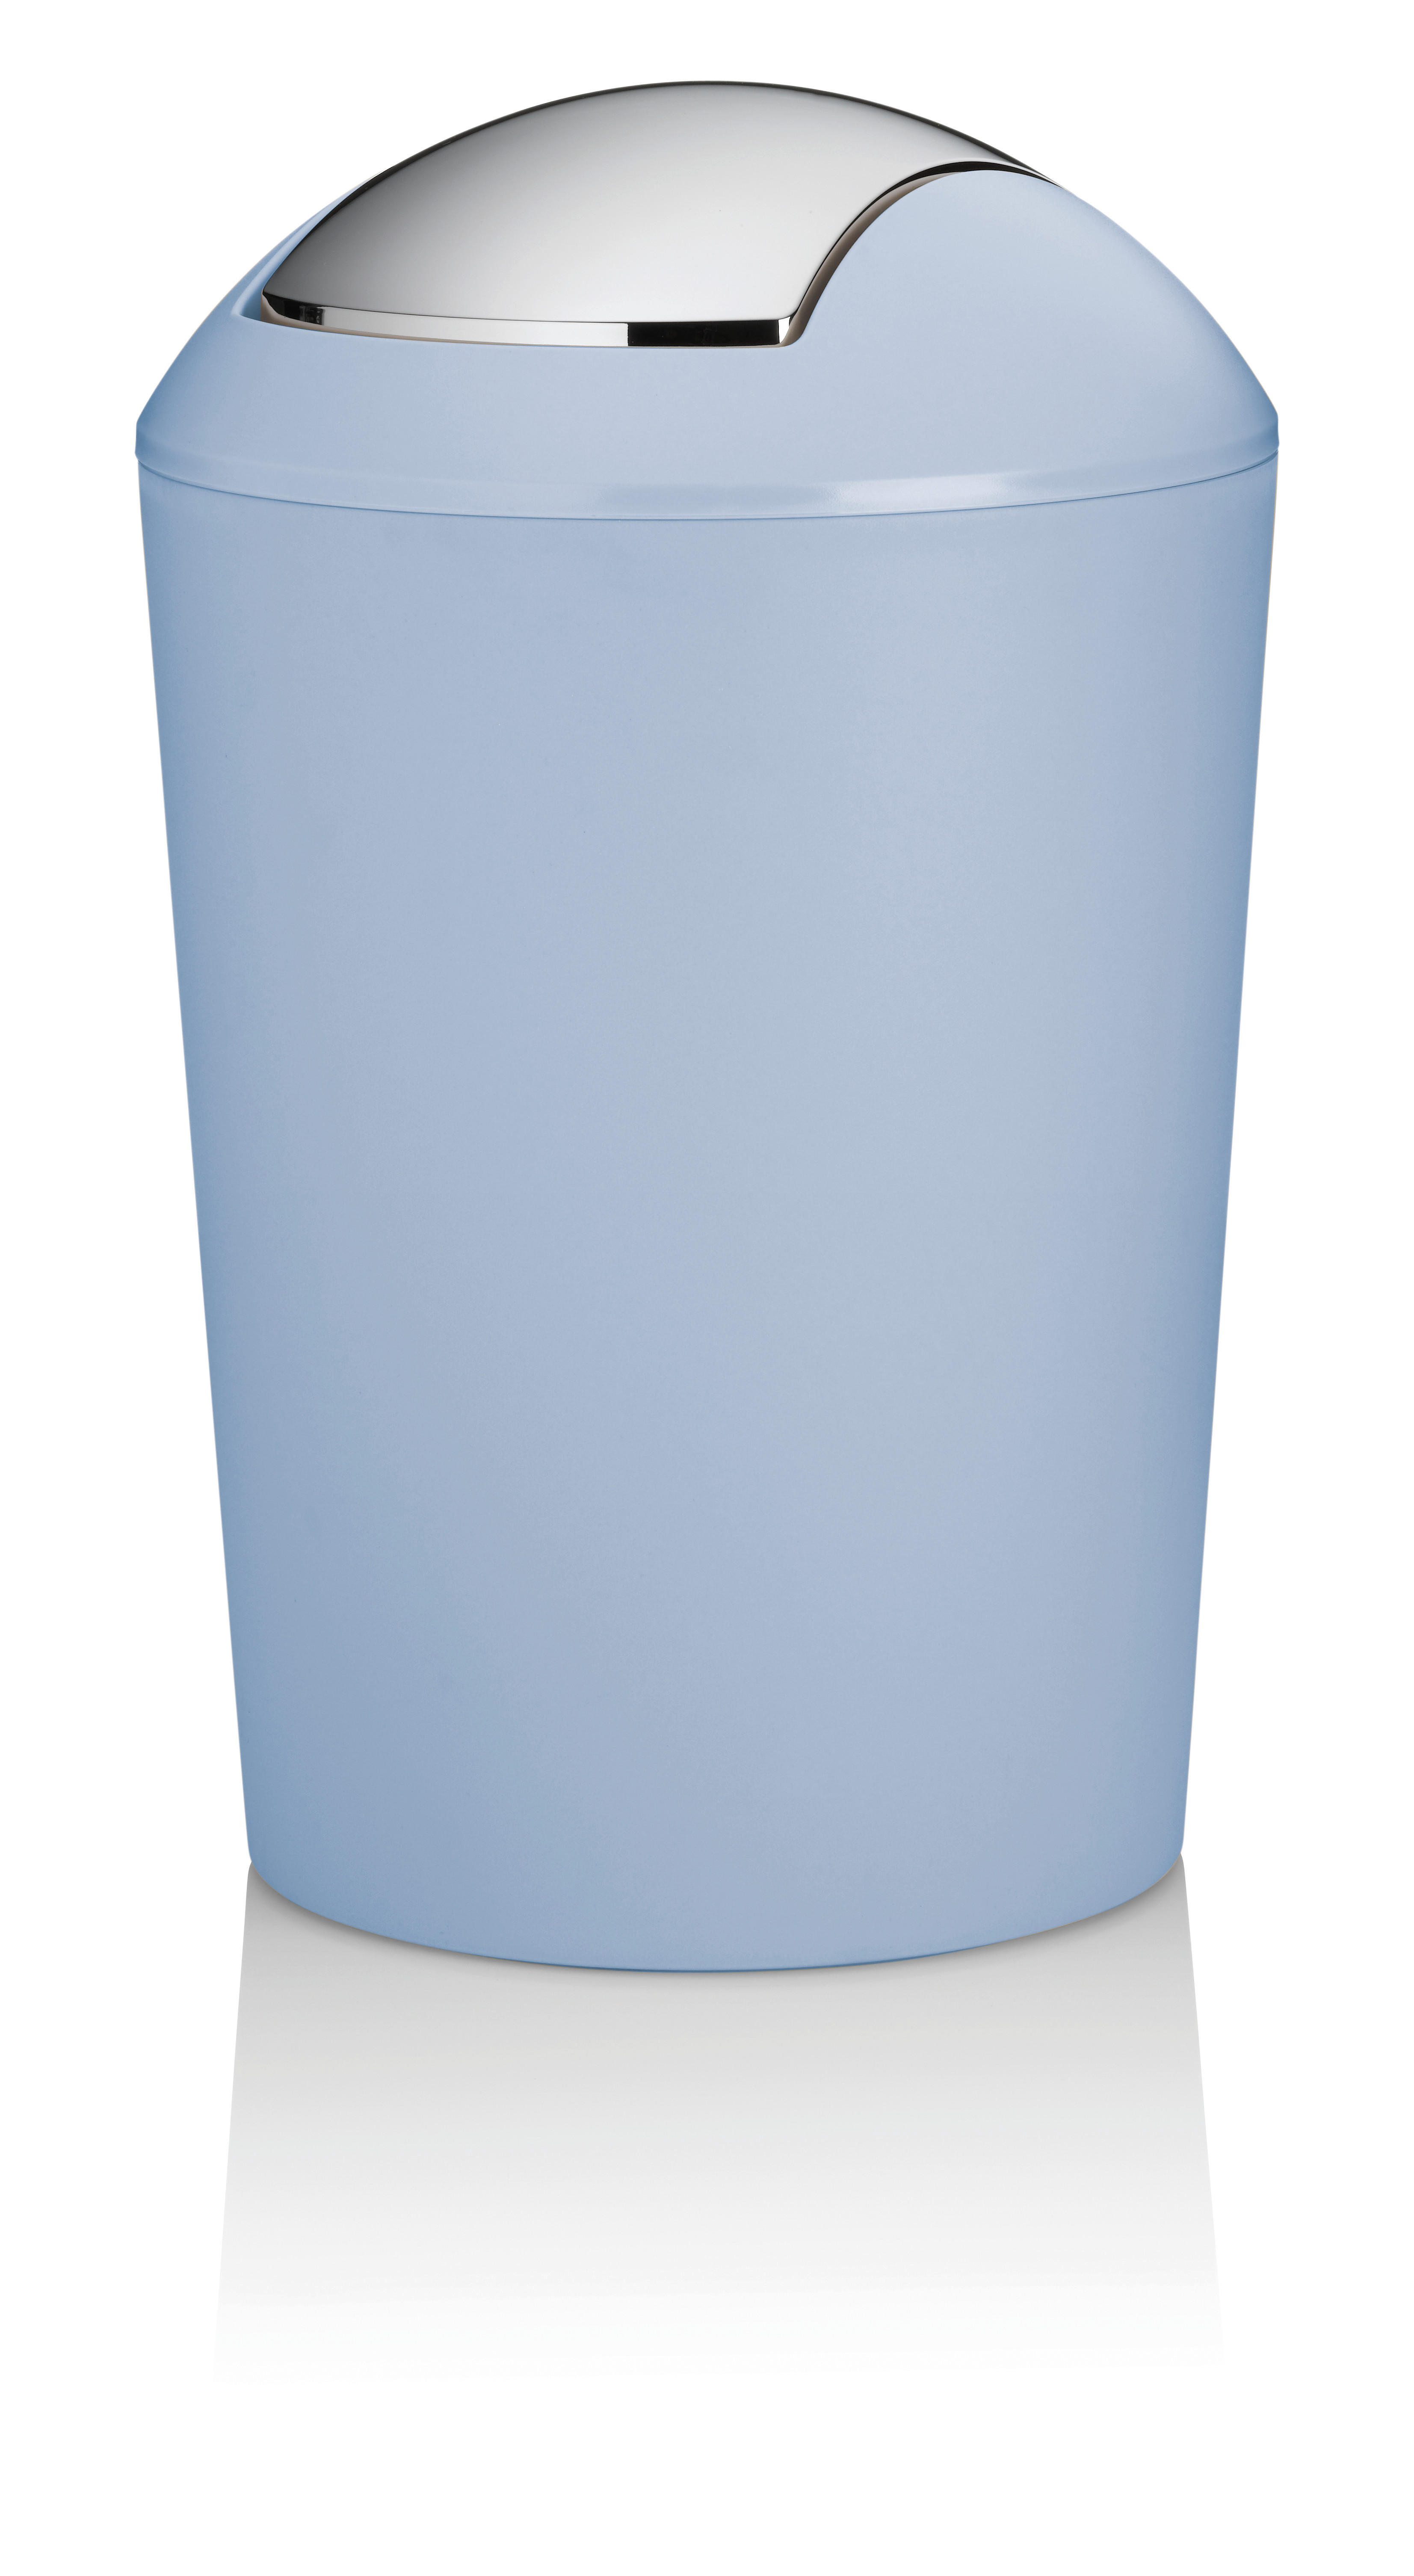 SCHWINGDECKELEIMER MARTA 5 L  - Blau, Basics, Kunststoff (19,5/29cm) - Kela